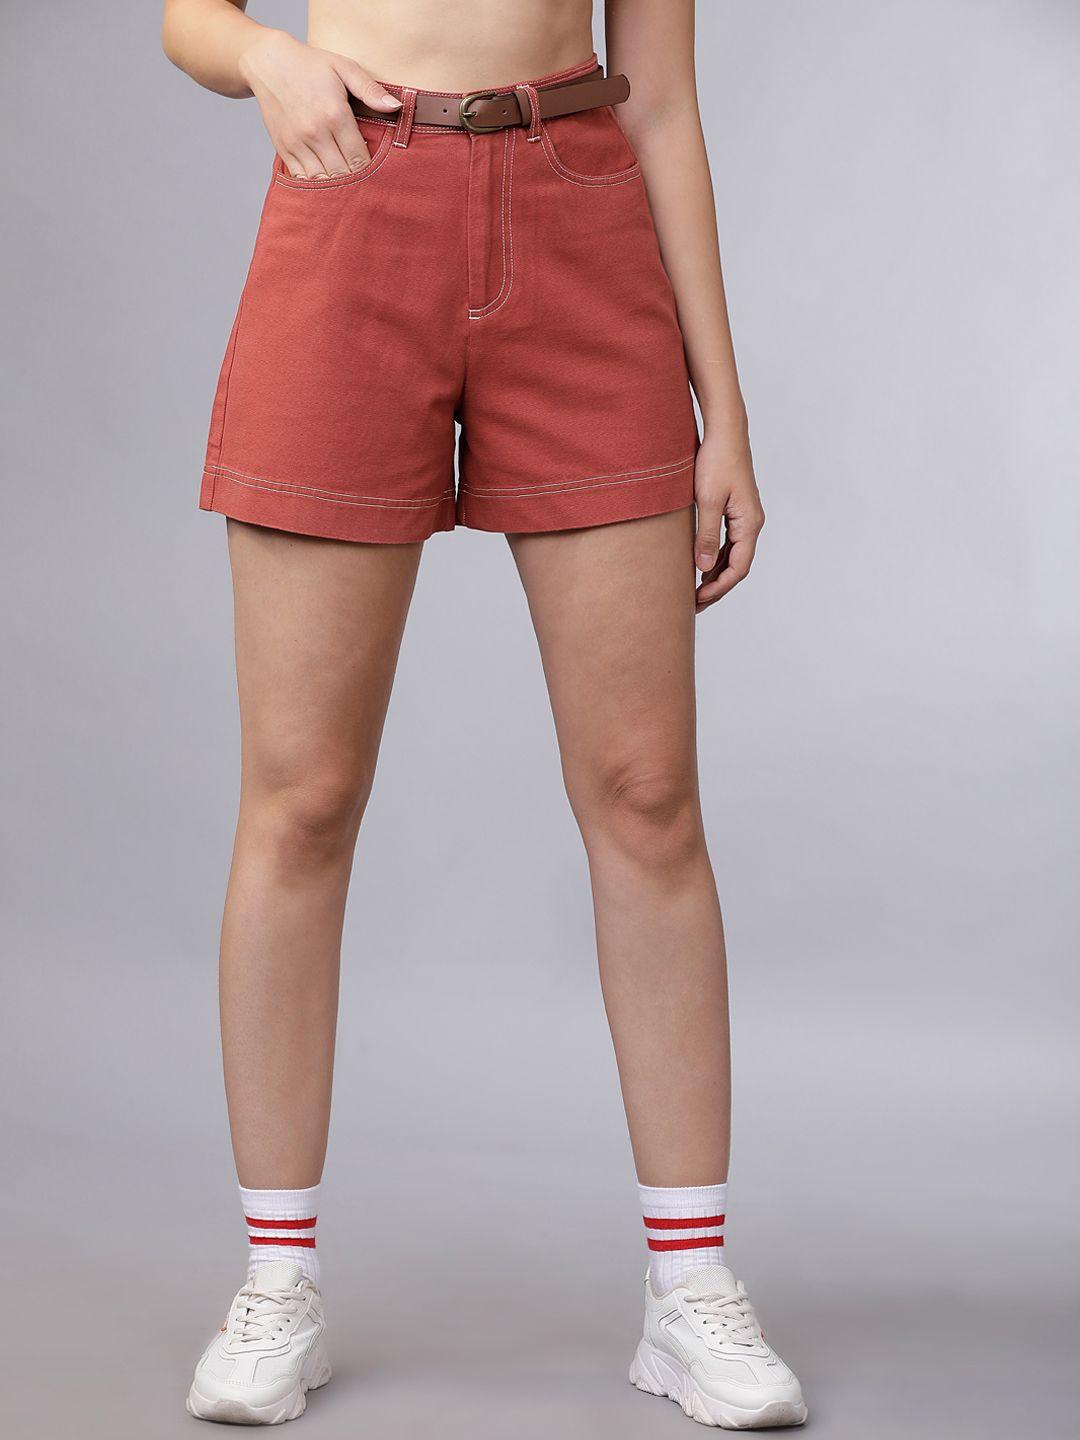 tokyo talkies women rust red solid slim fit regular shorts